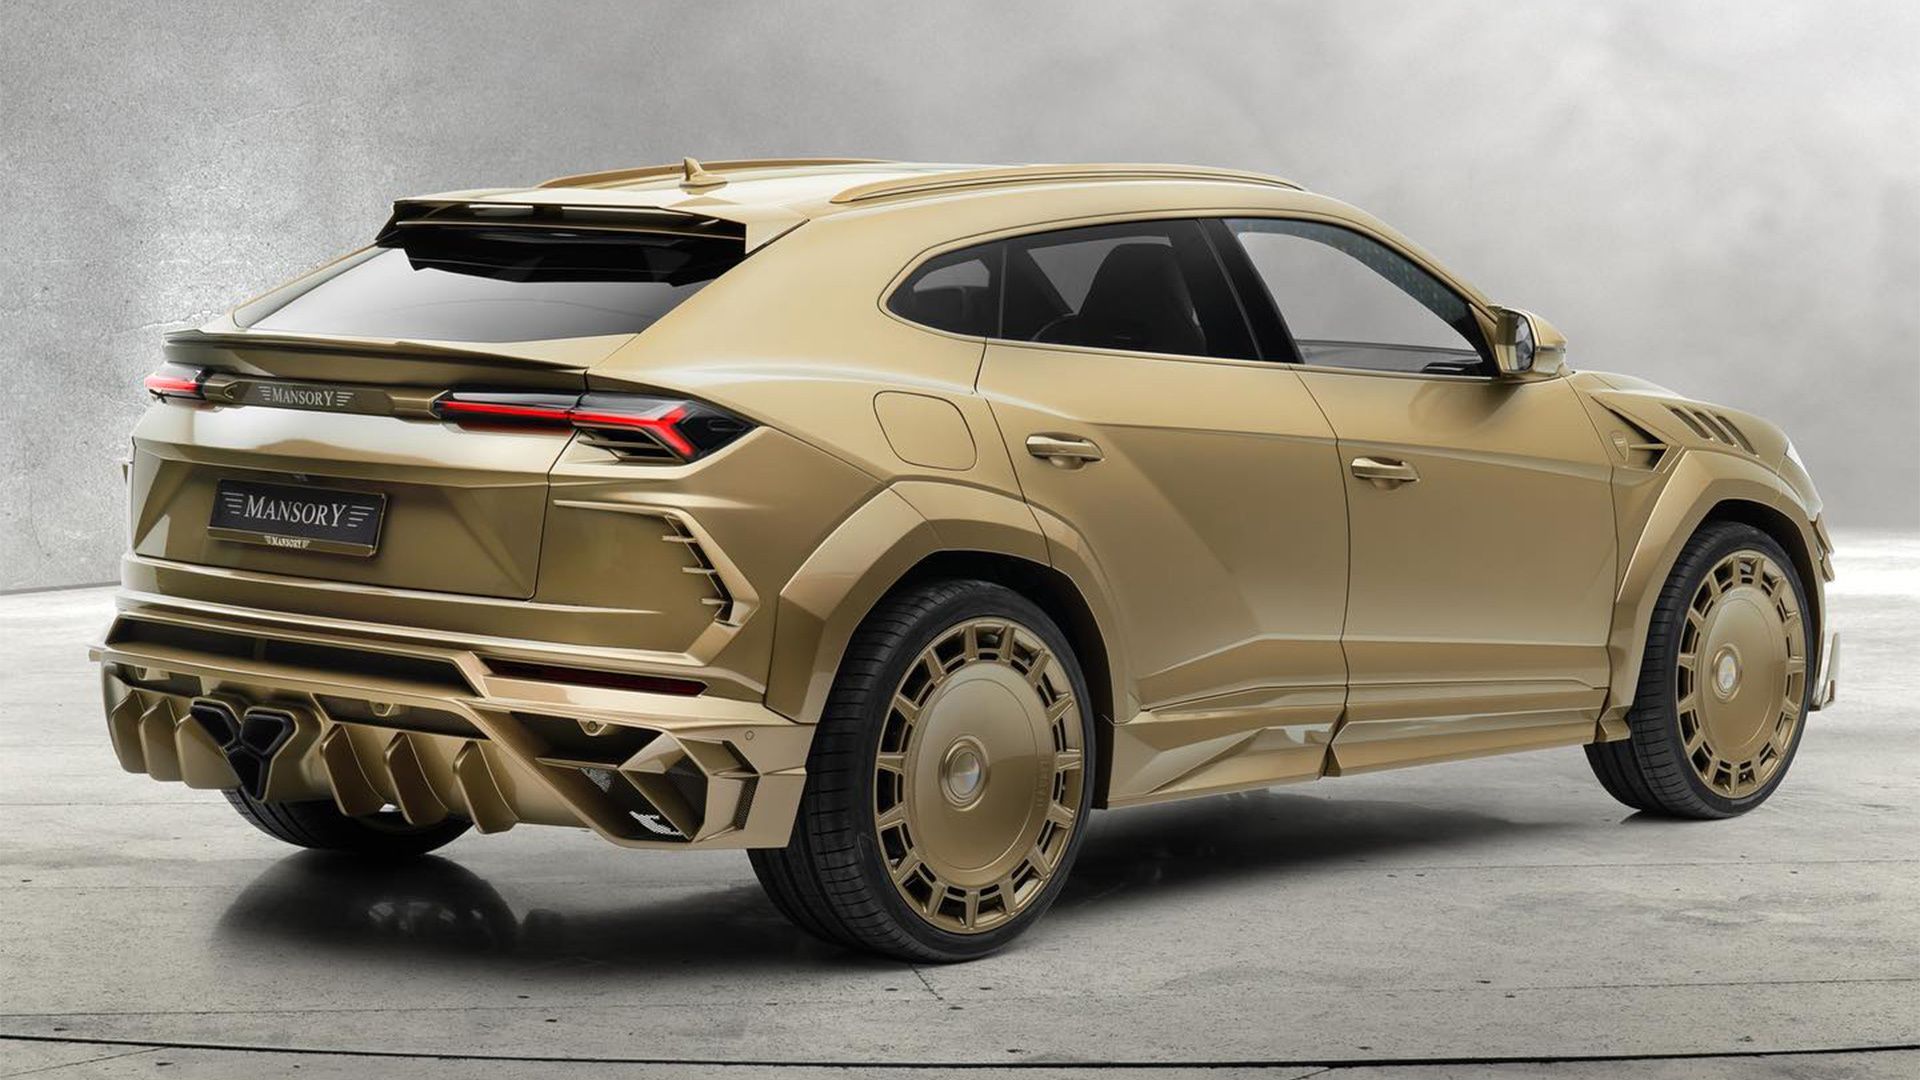 SUVs Don't Get Crazier Than An All-Gold Lamborghini Urus With 900 HP